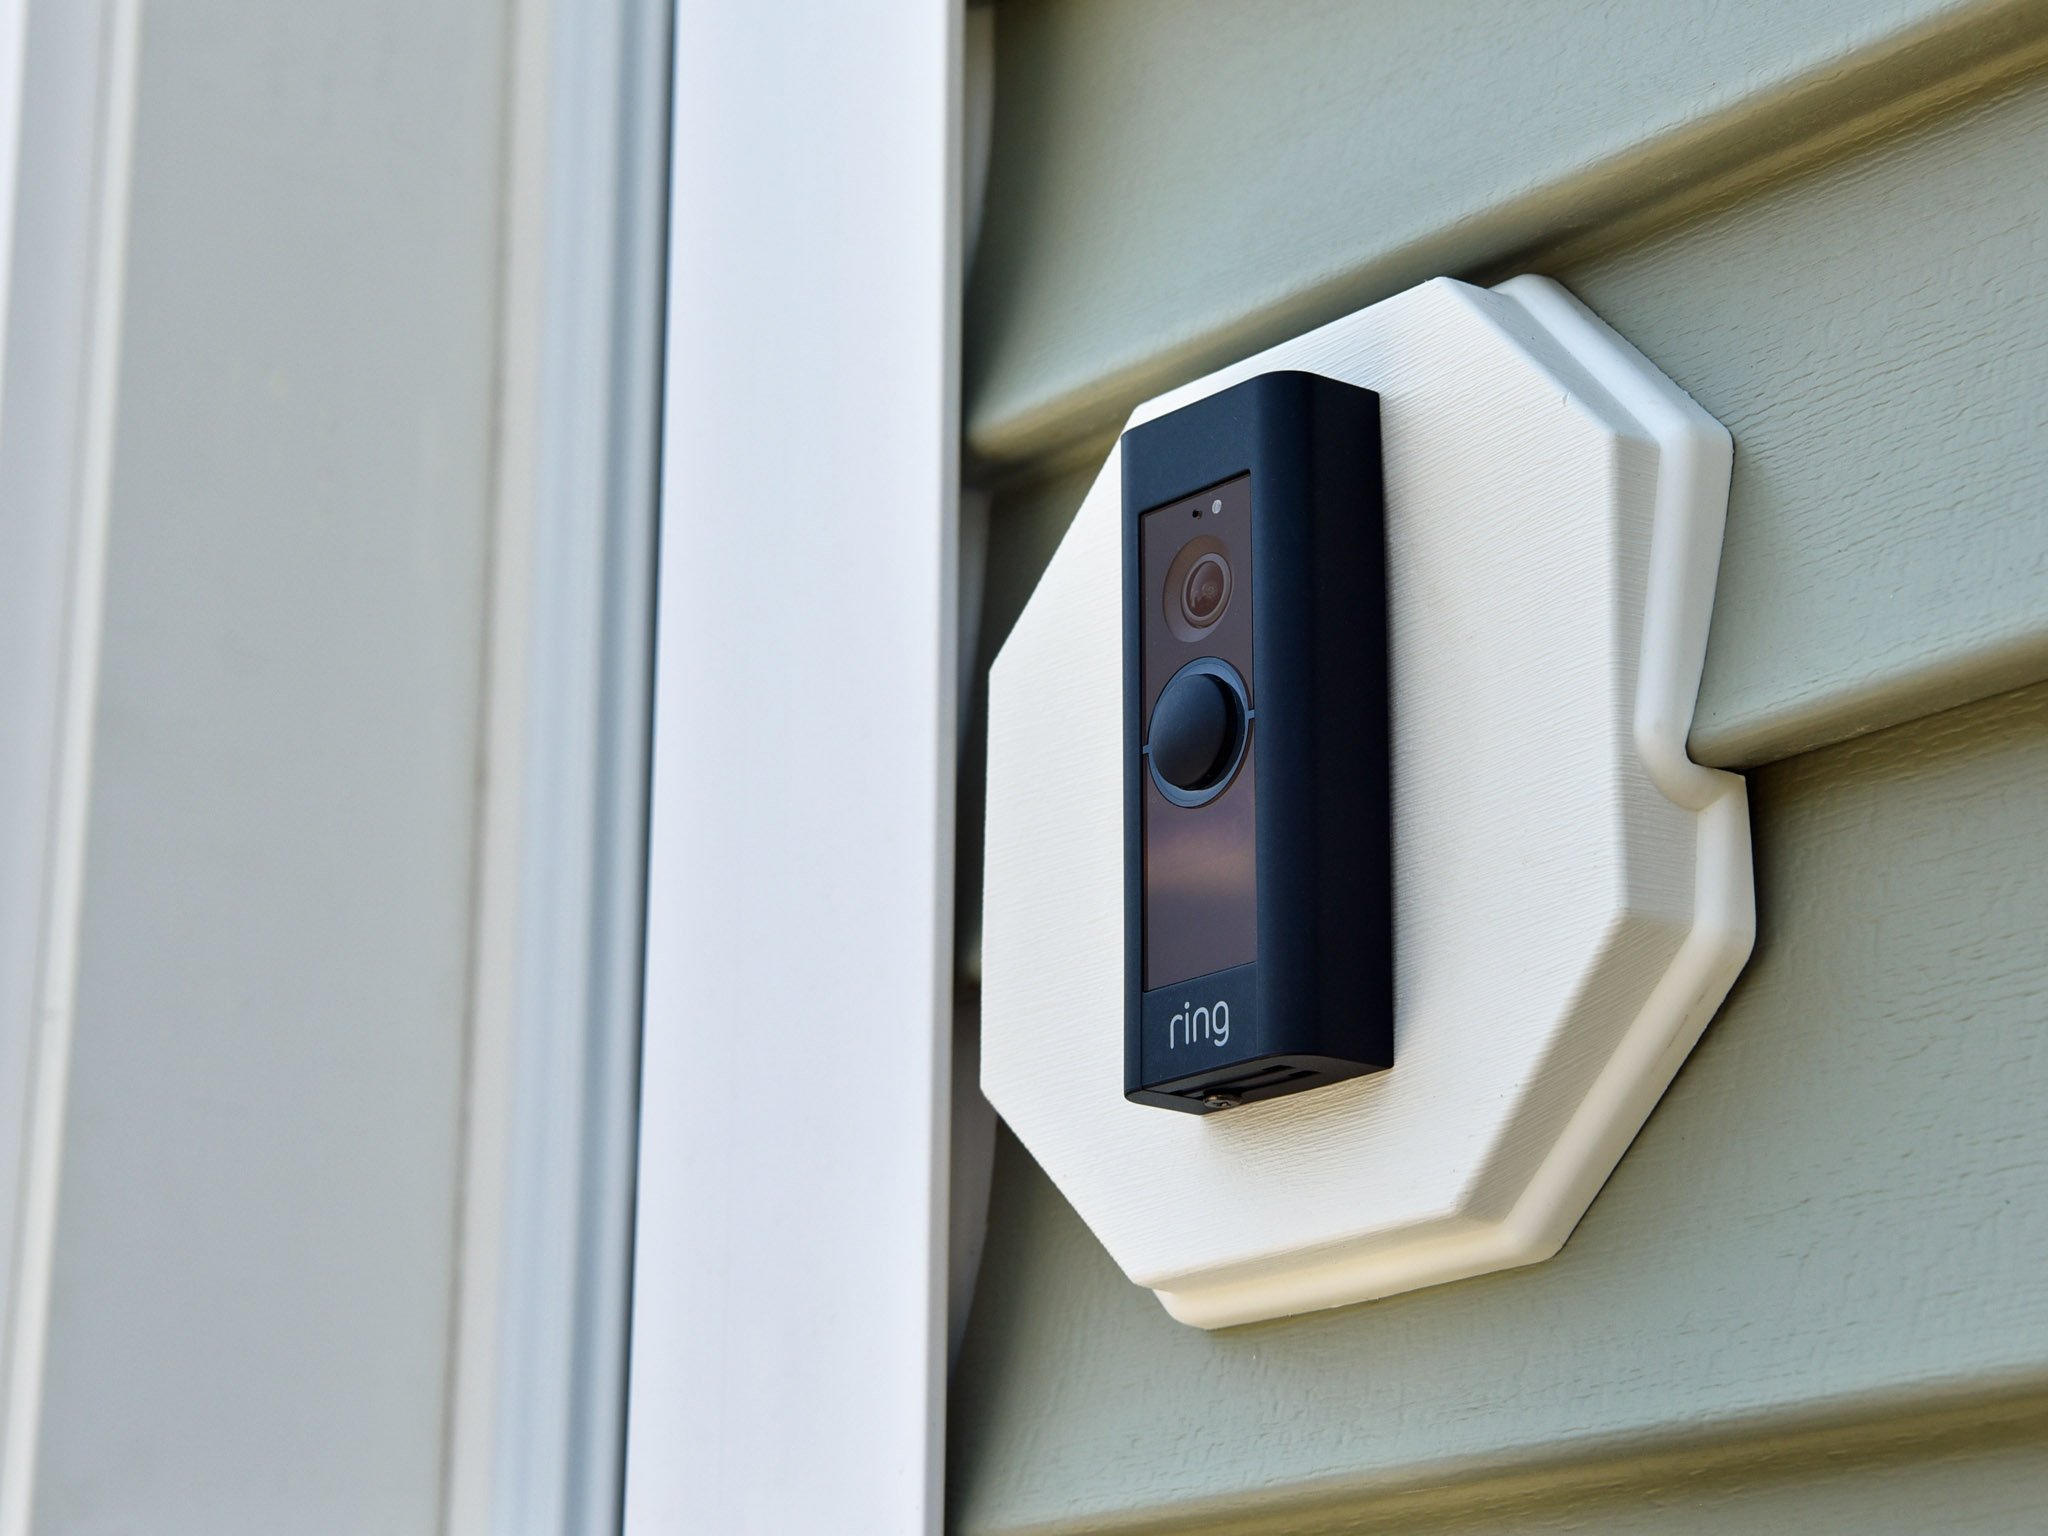 ring-video-doorbell-outside.jpg